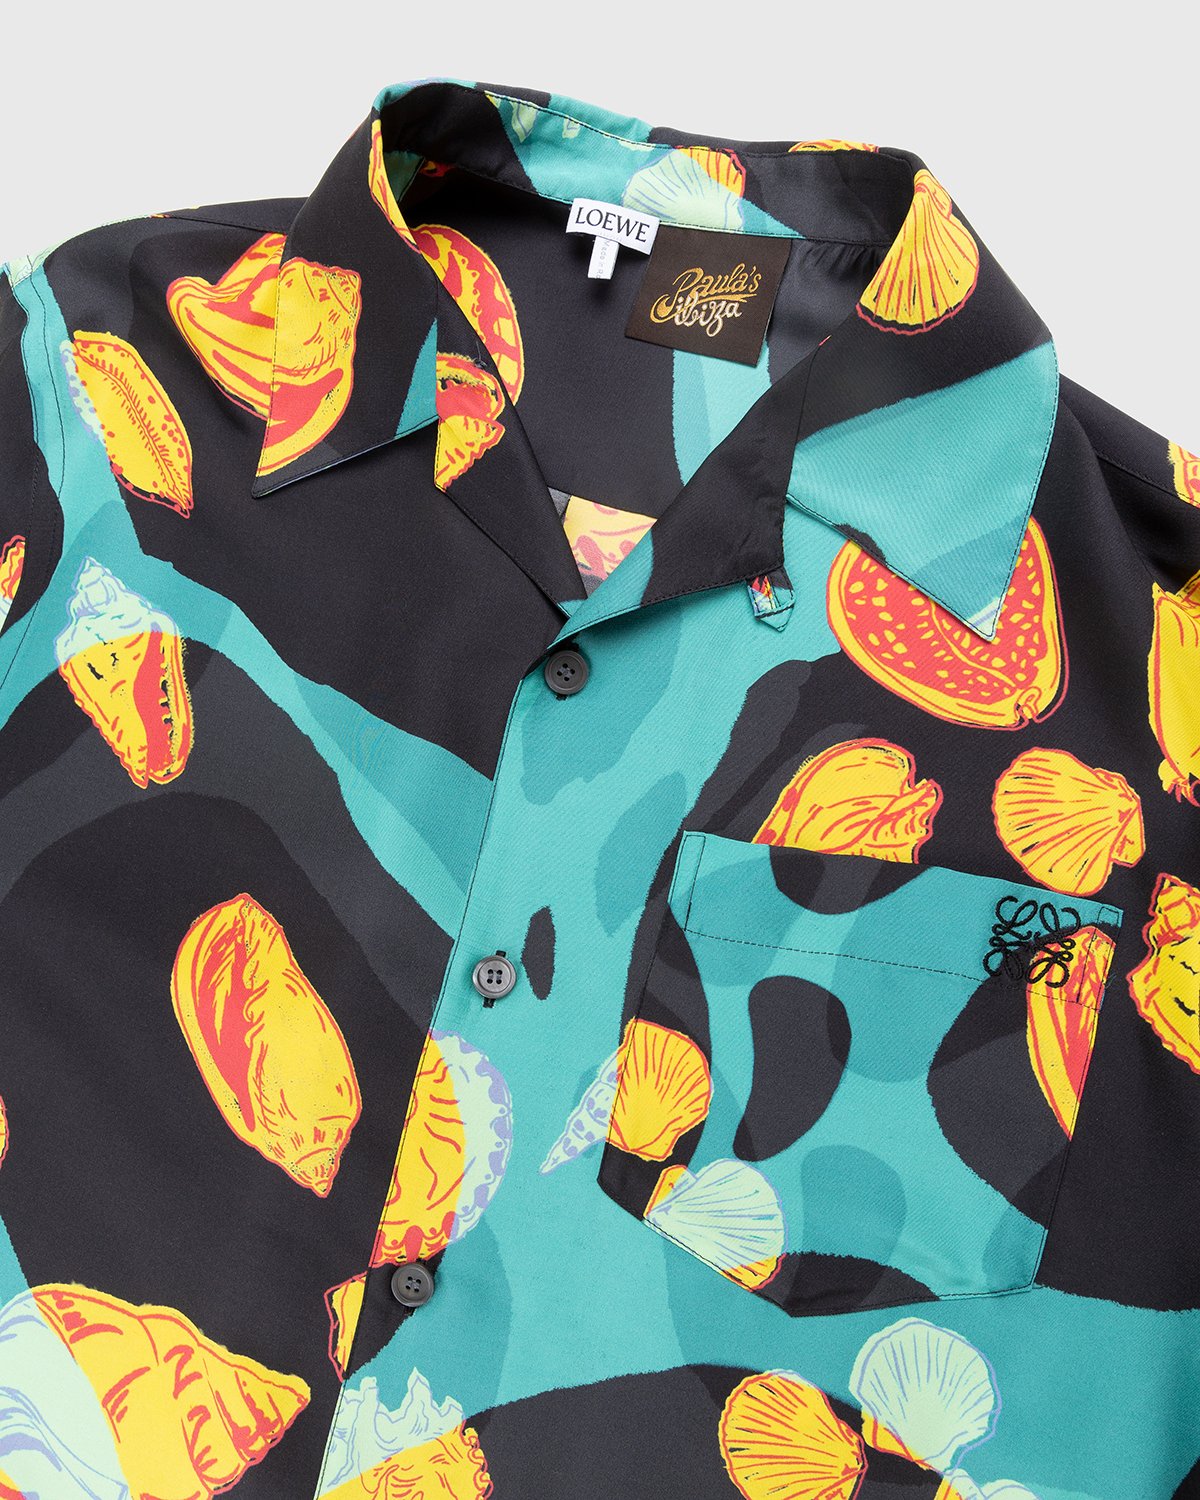 Loewe - Paula's Ibiza Shell Print Bowling Shirt Black - Clothing - Multi - Image 4